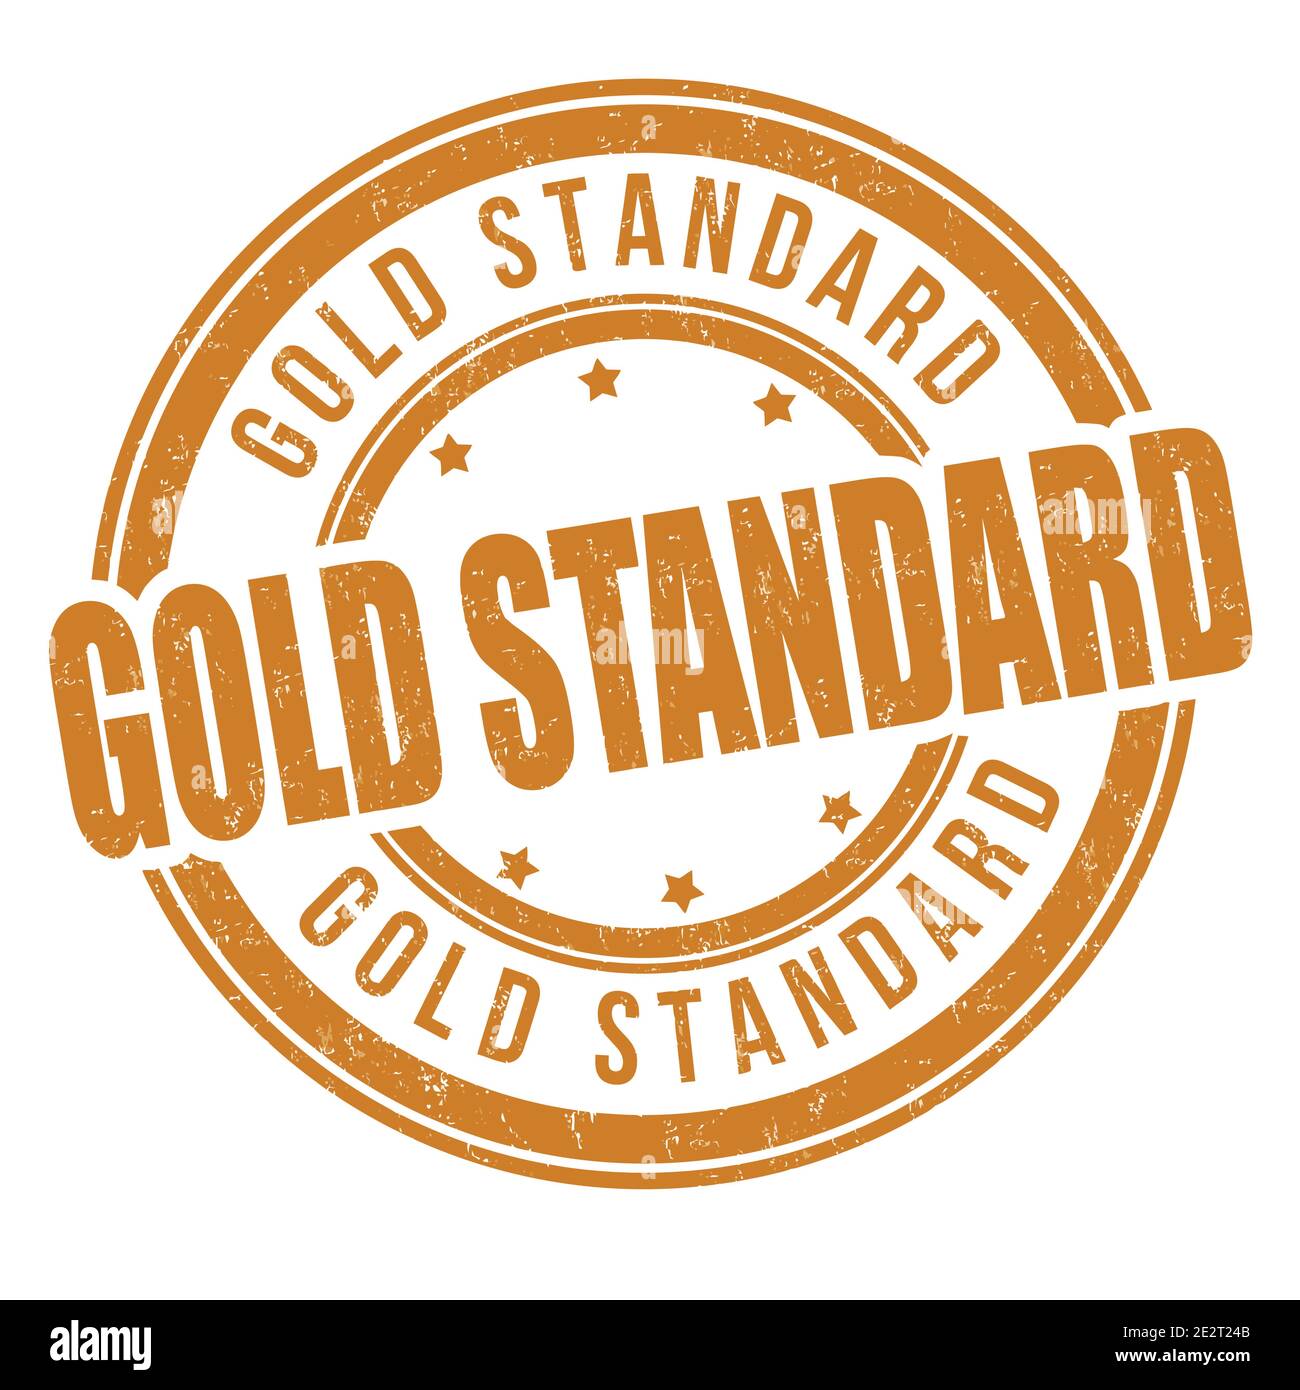 Gold standard grunge rubber stamp on white background, vector illustration Stock Vector